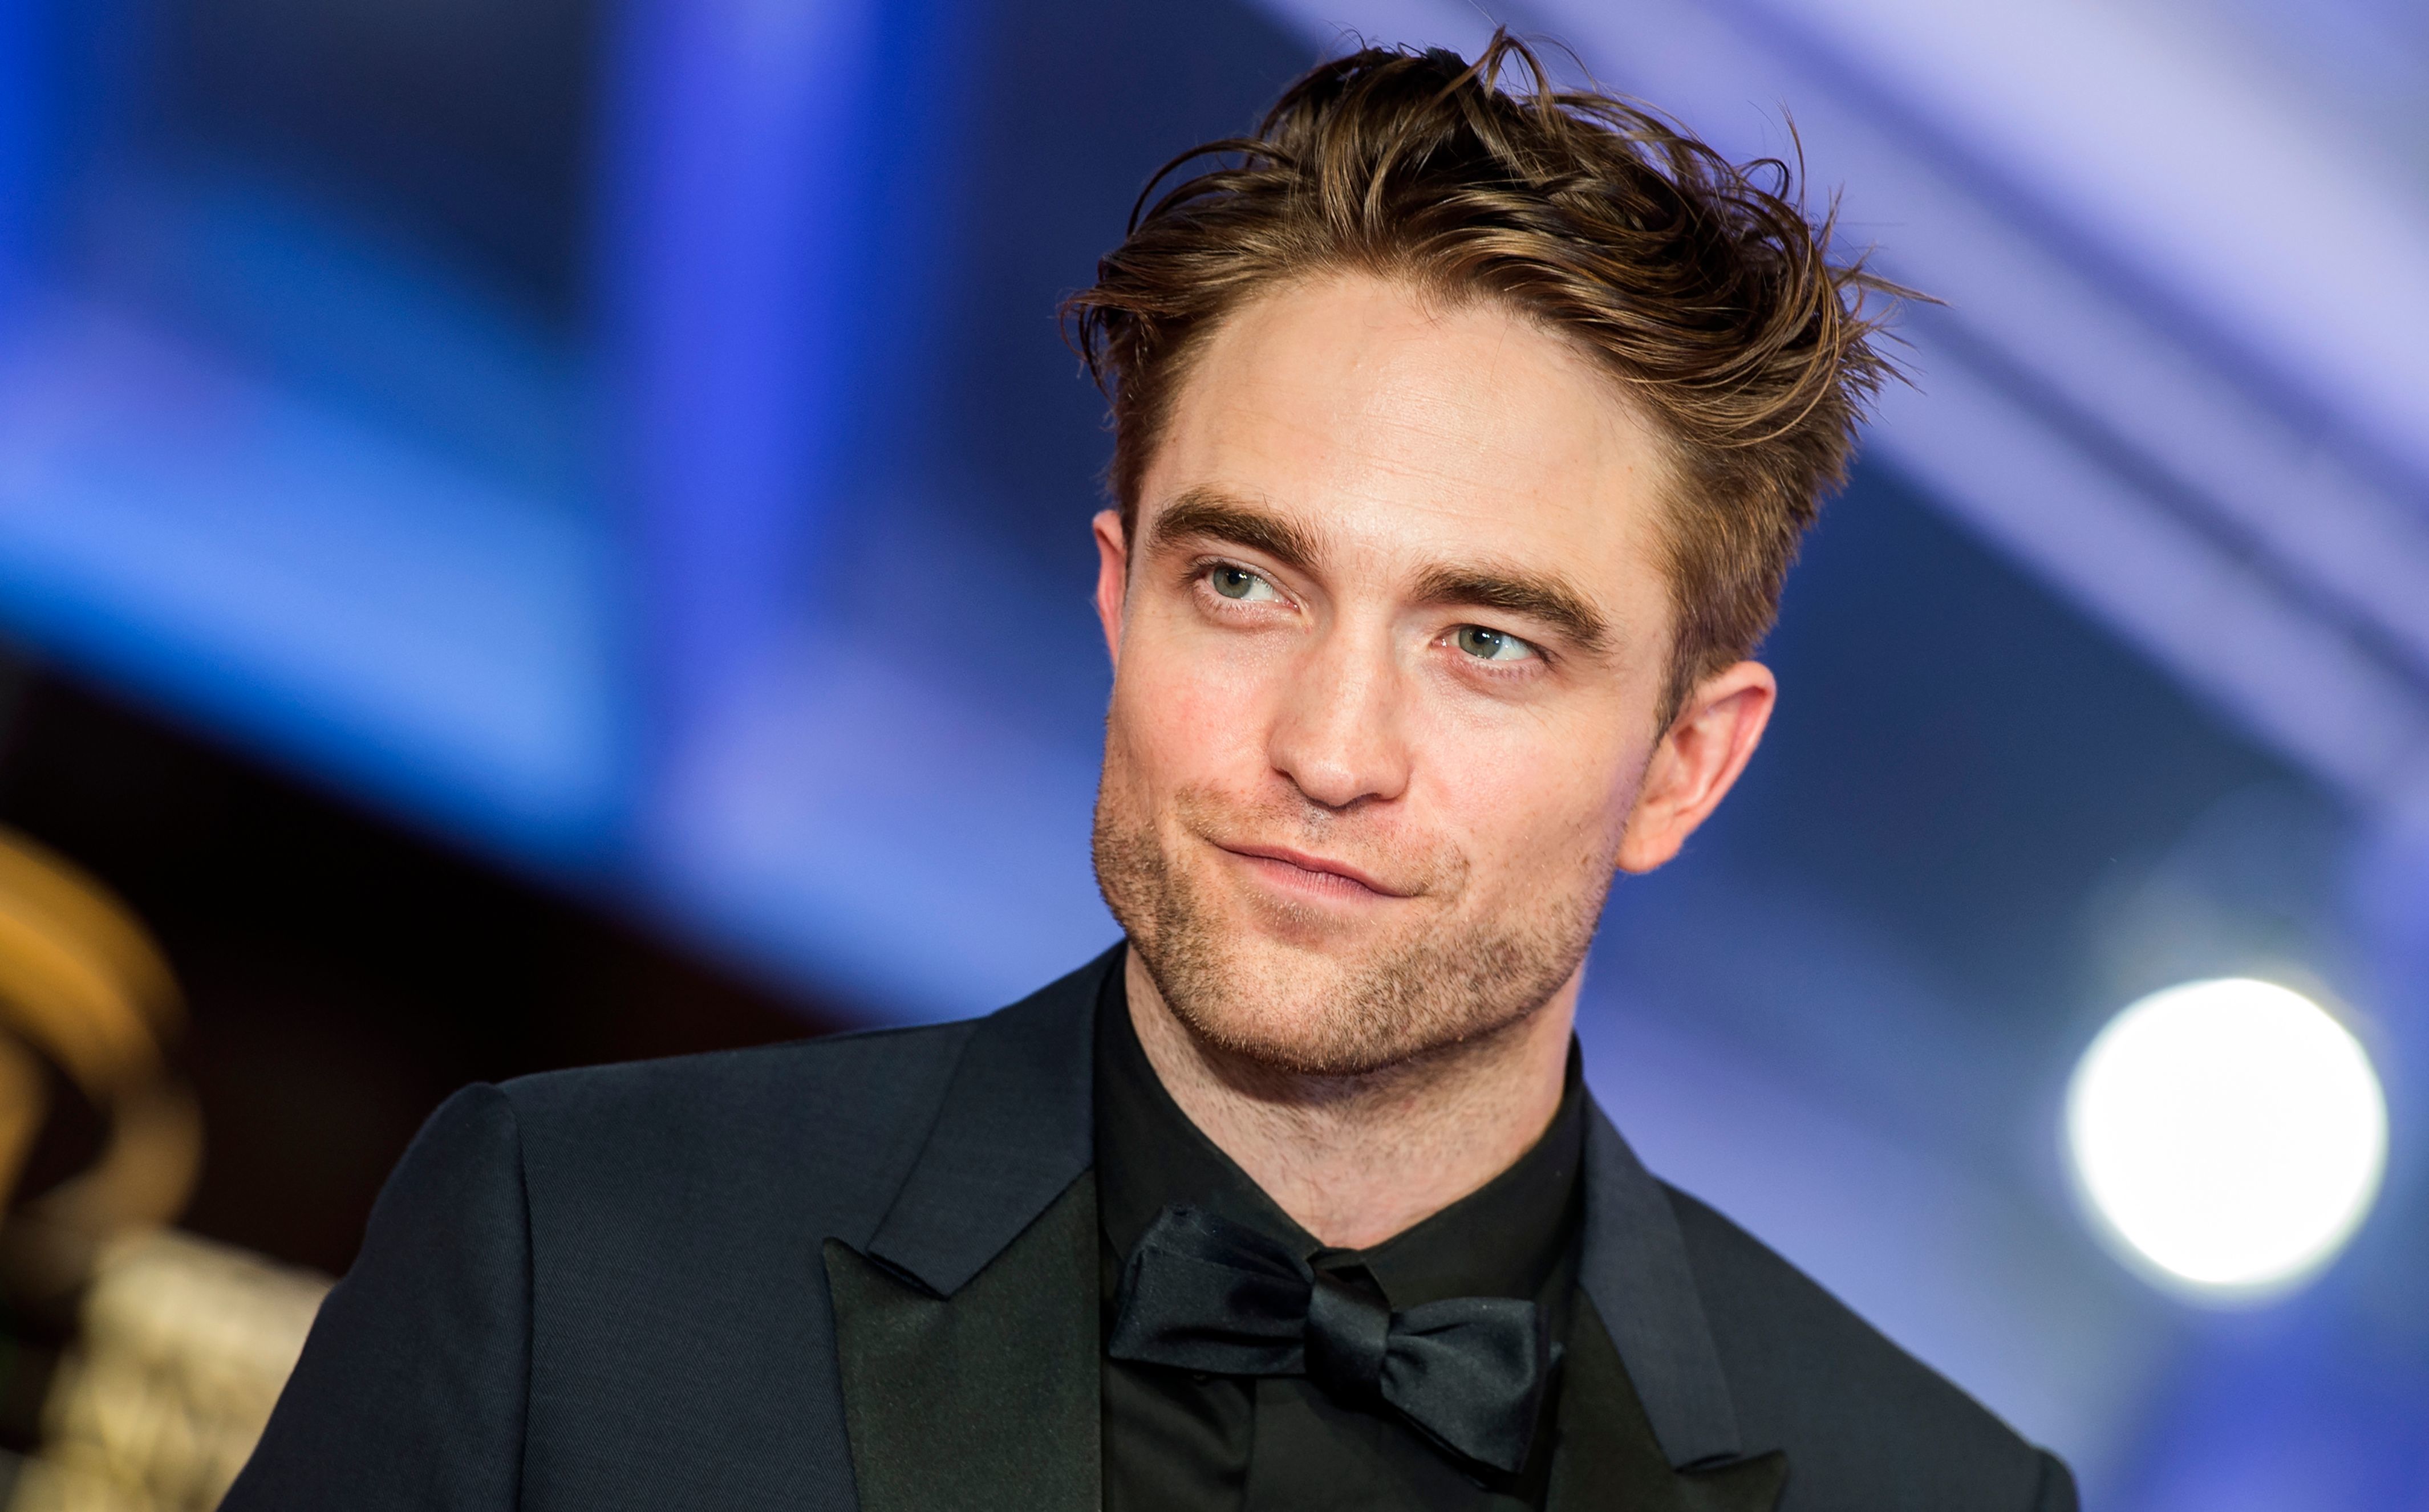 Robert Pattinson in talks to play Batman in 2021 film